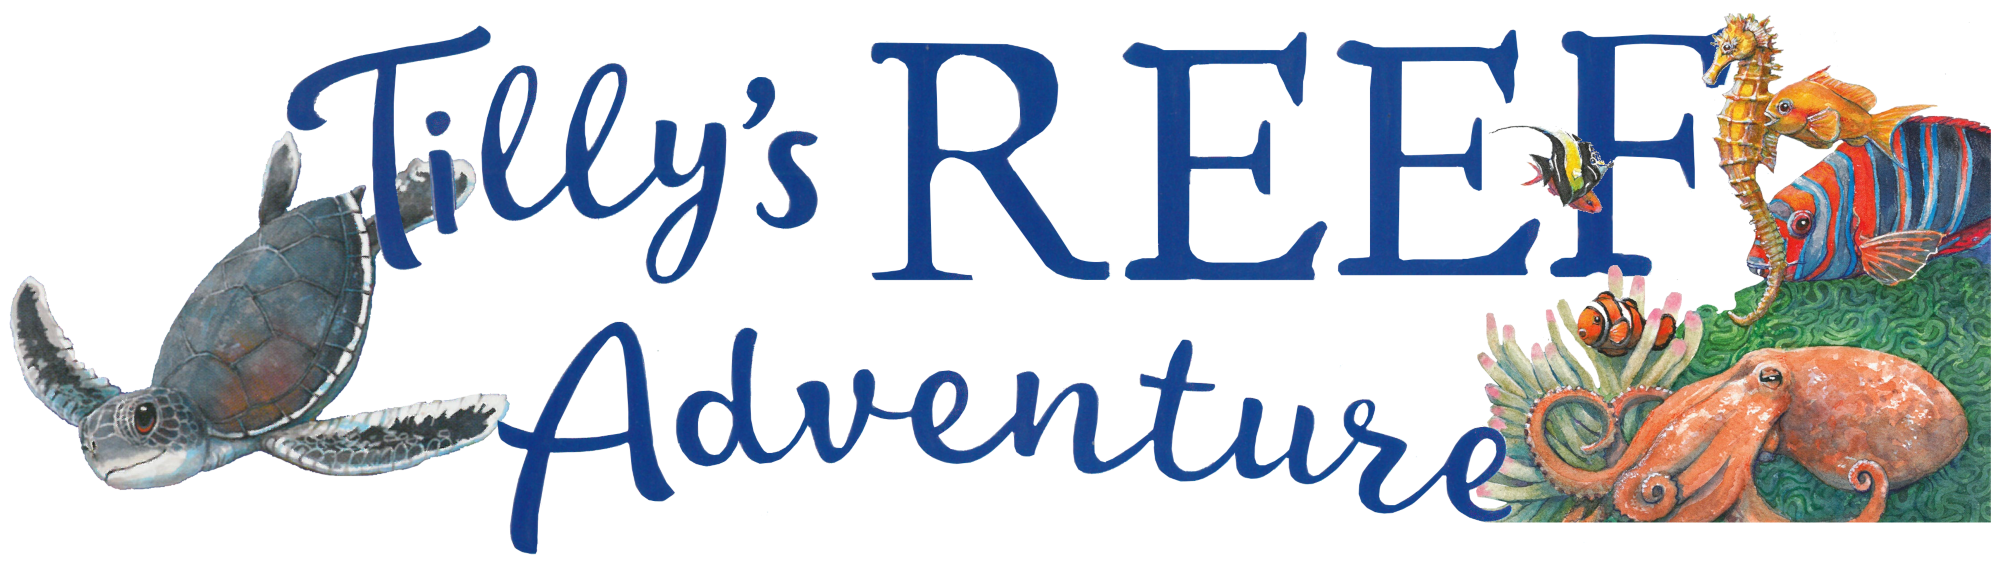 Tilly's Reef Adventure banner logo